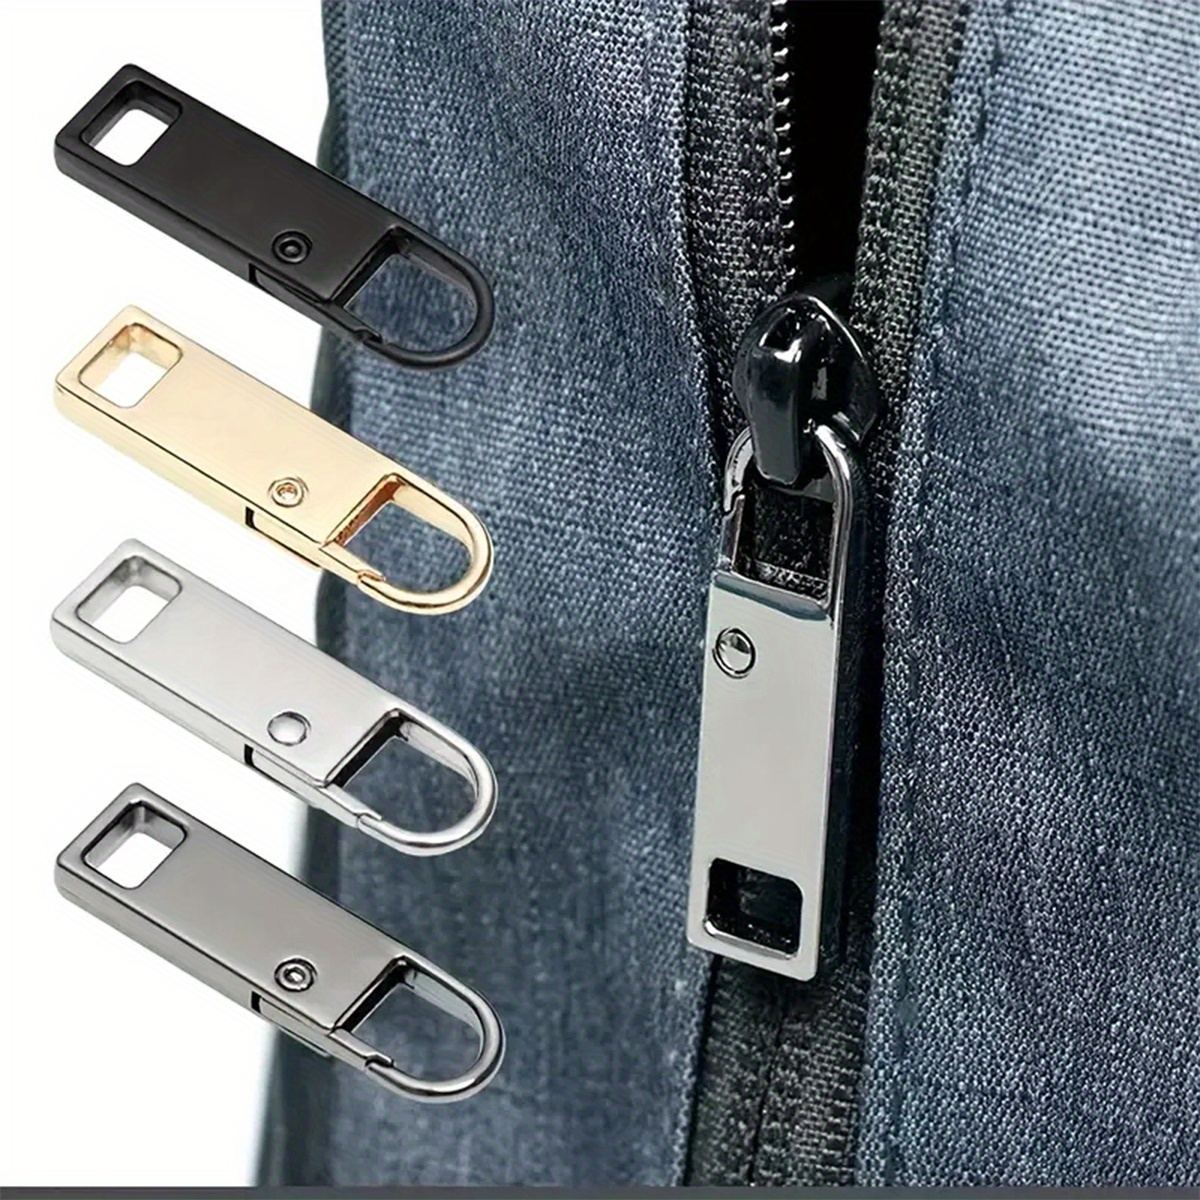 6pcs/set Universal Zipper Repair Kit Zipper Replacement Zipper Pull Kit for Clothing Jackets Purses Luggage Backpacks Tents Sleeping Bag